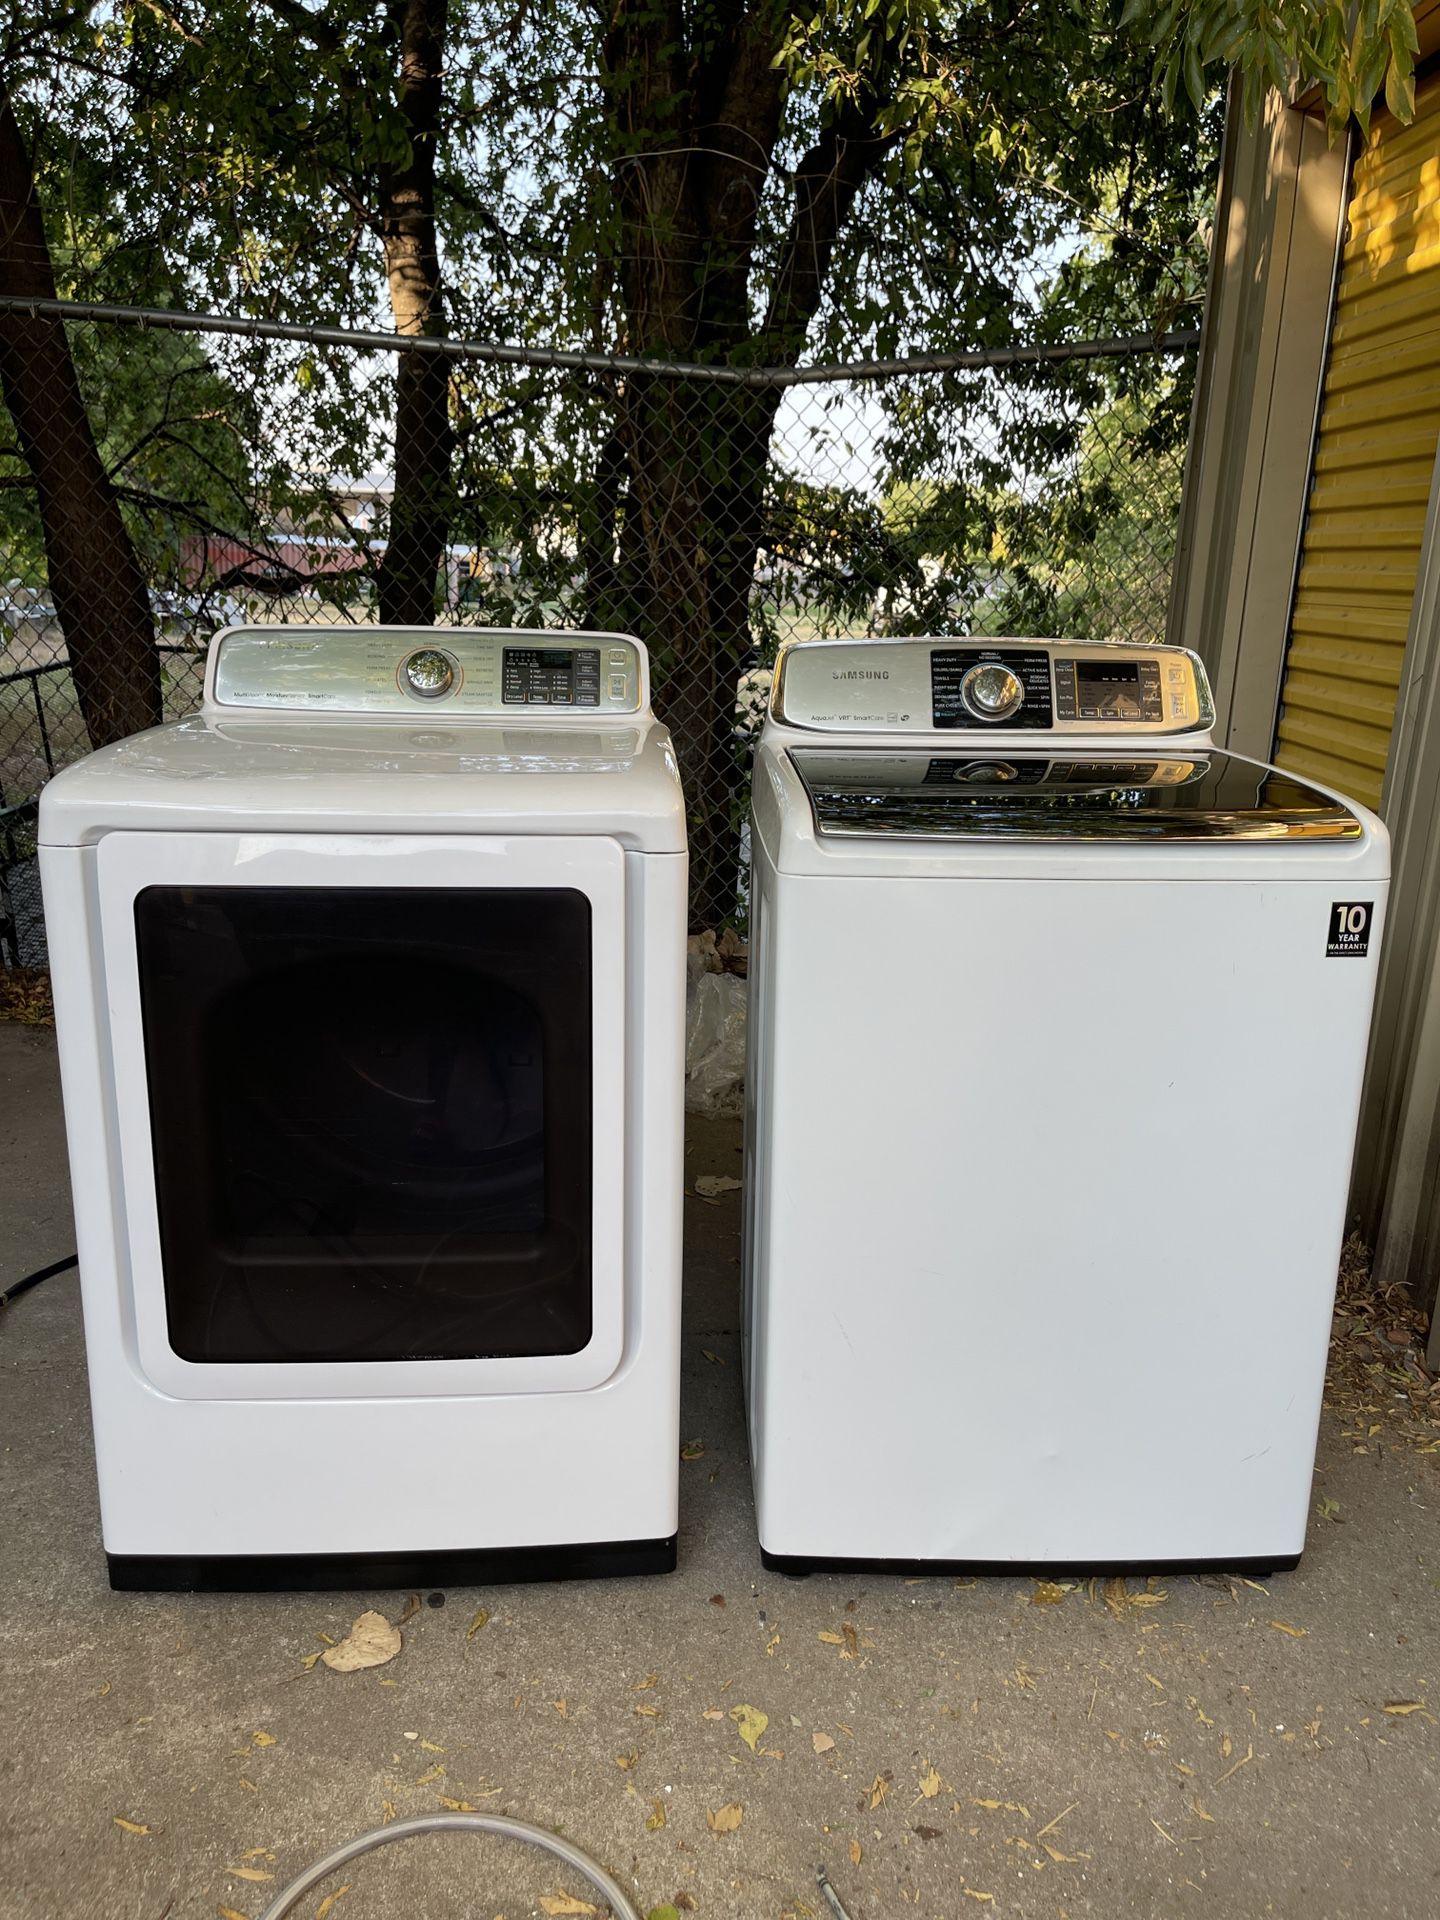 Samsung Washer And Dryer Set